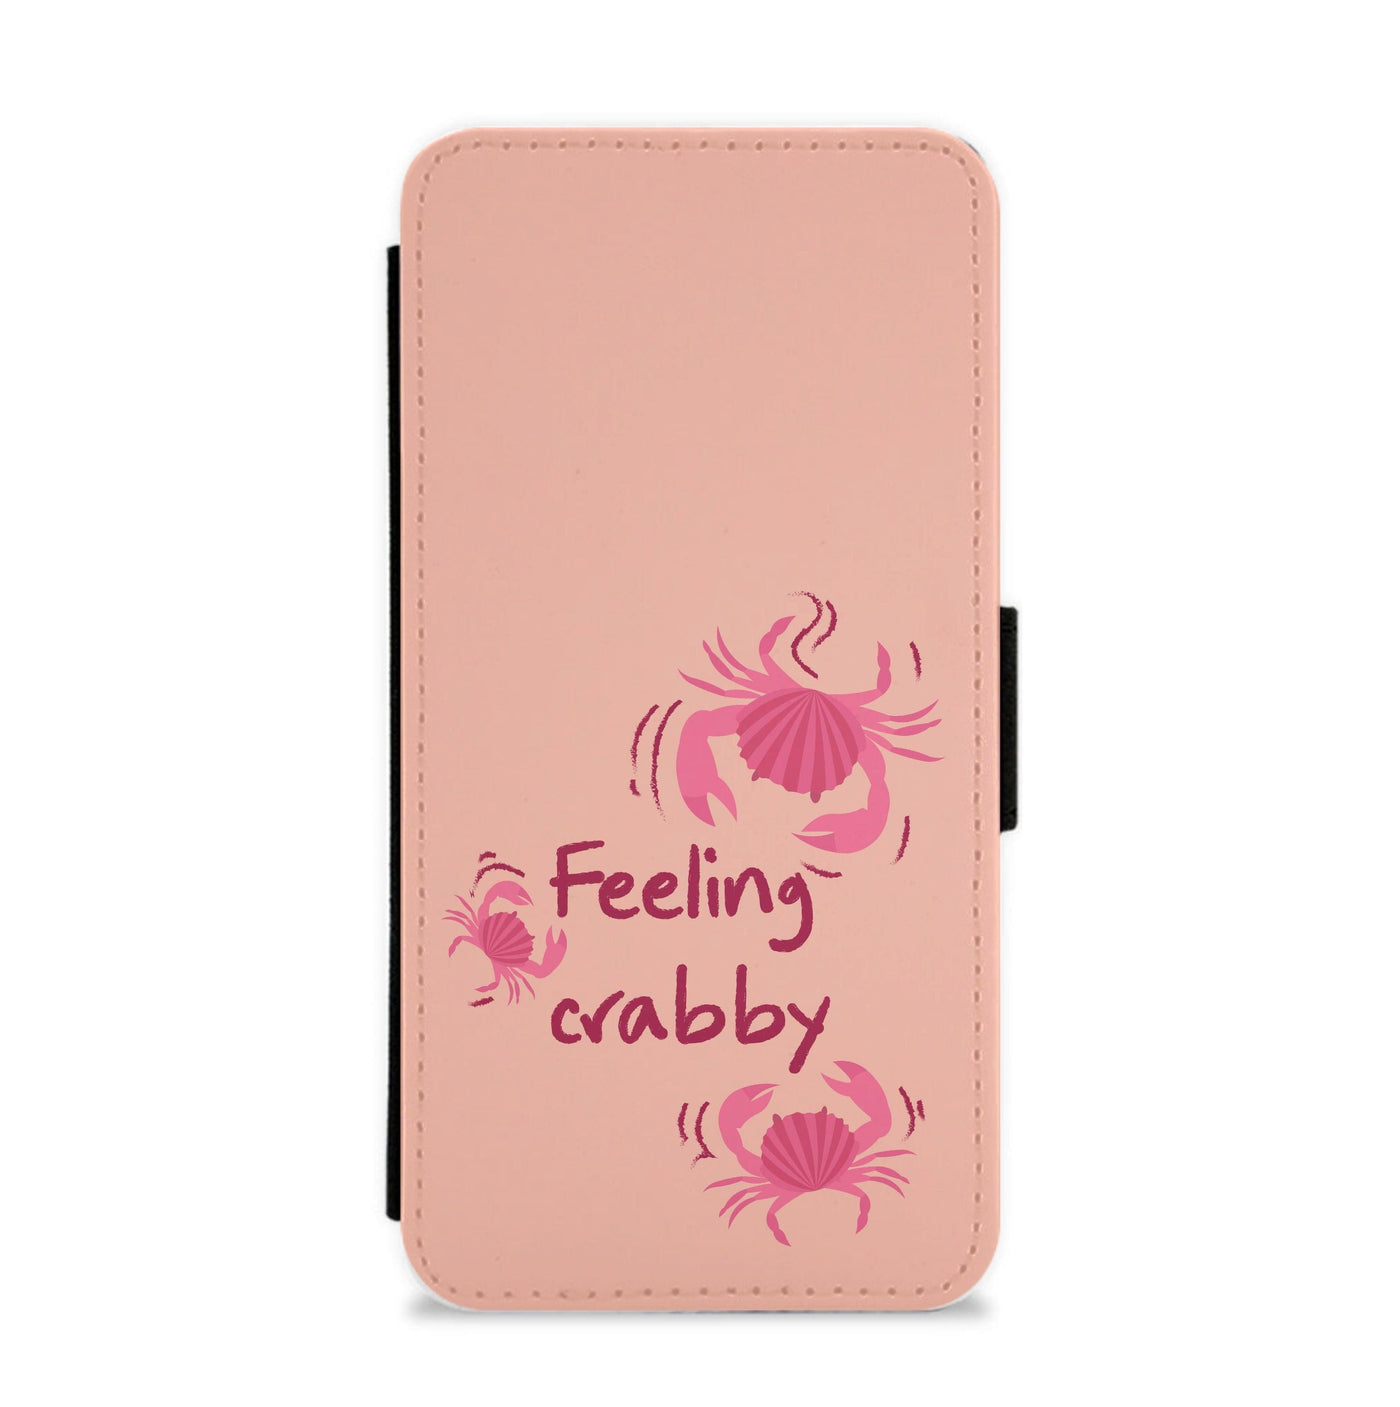 Feeling Crabby - Sealife Flip / Wallet Phone Case